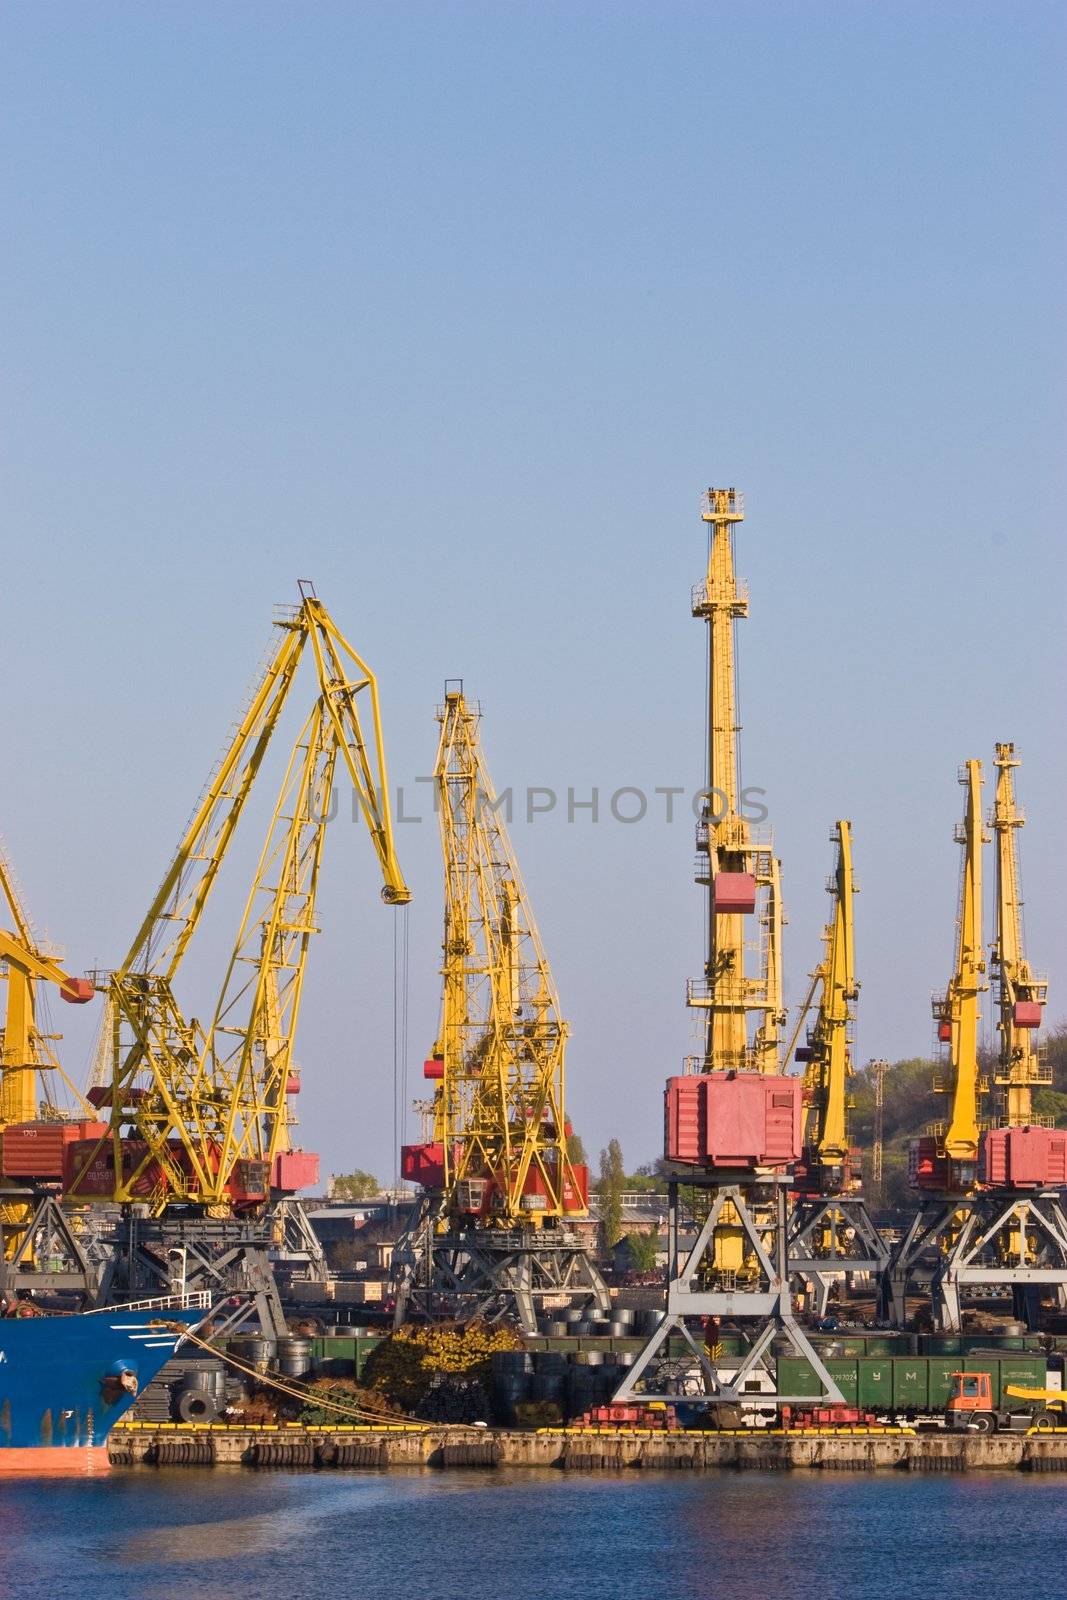 transportation series: cargo port with crane and ship